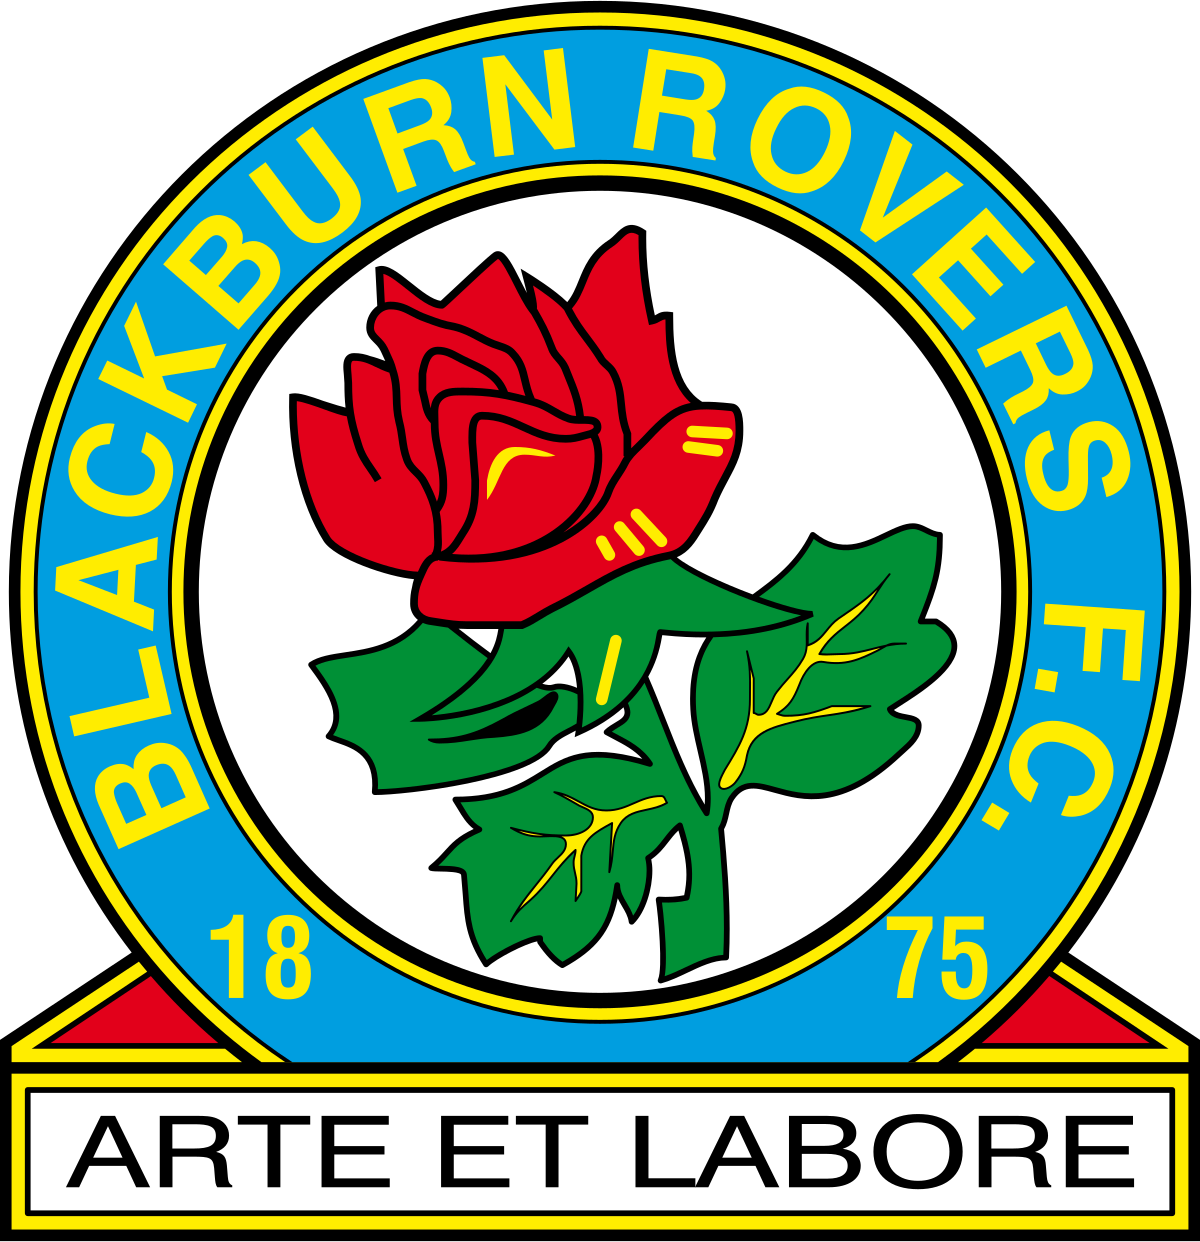 1200px-Blackburn_Rovers.svg.png